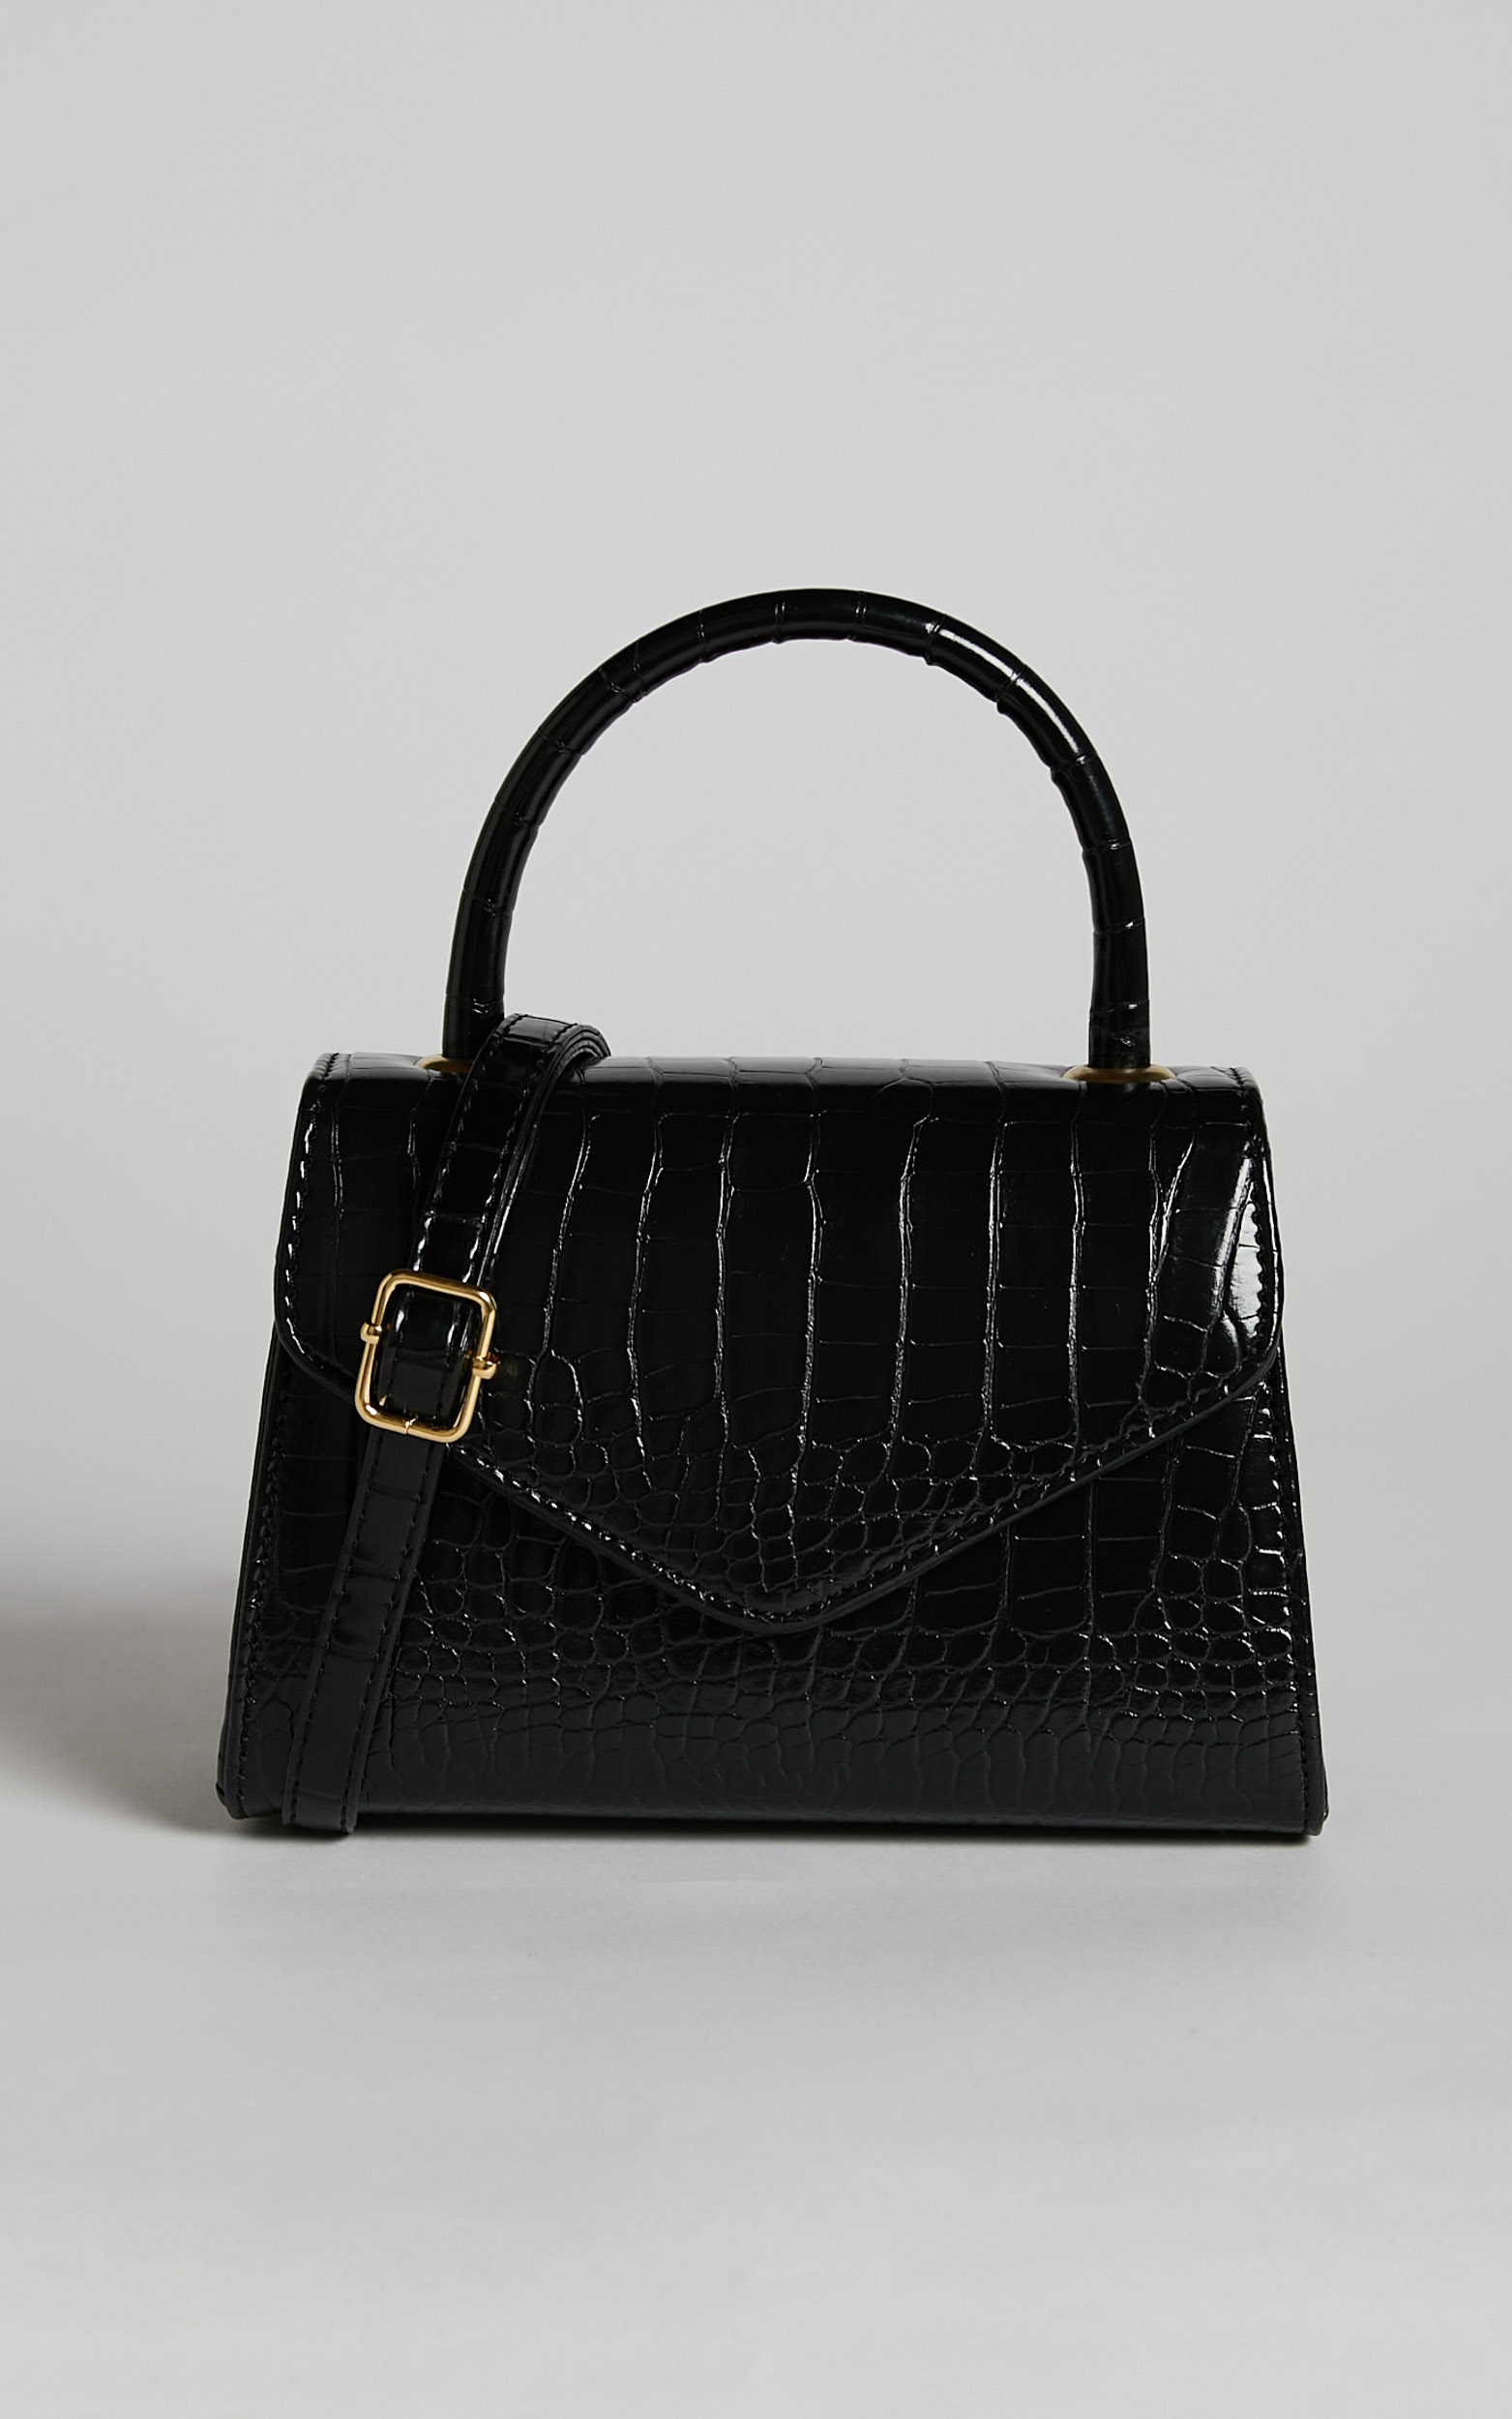 Marilou Bag - Croc Embossed Top Handle Bag in Black - NoSize, BLK1, hi-res image number null